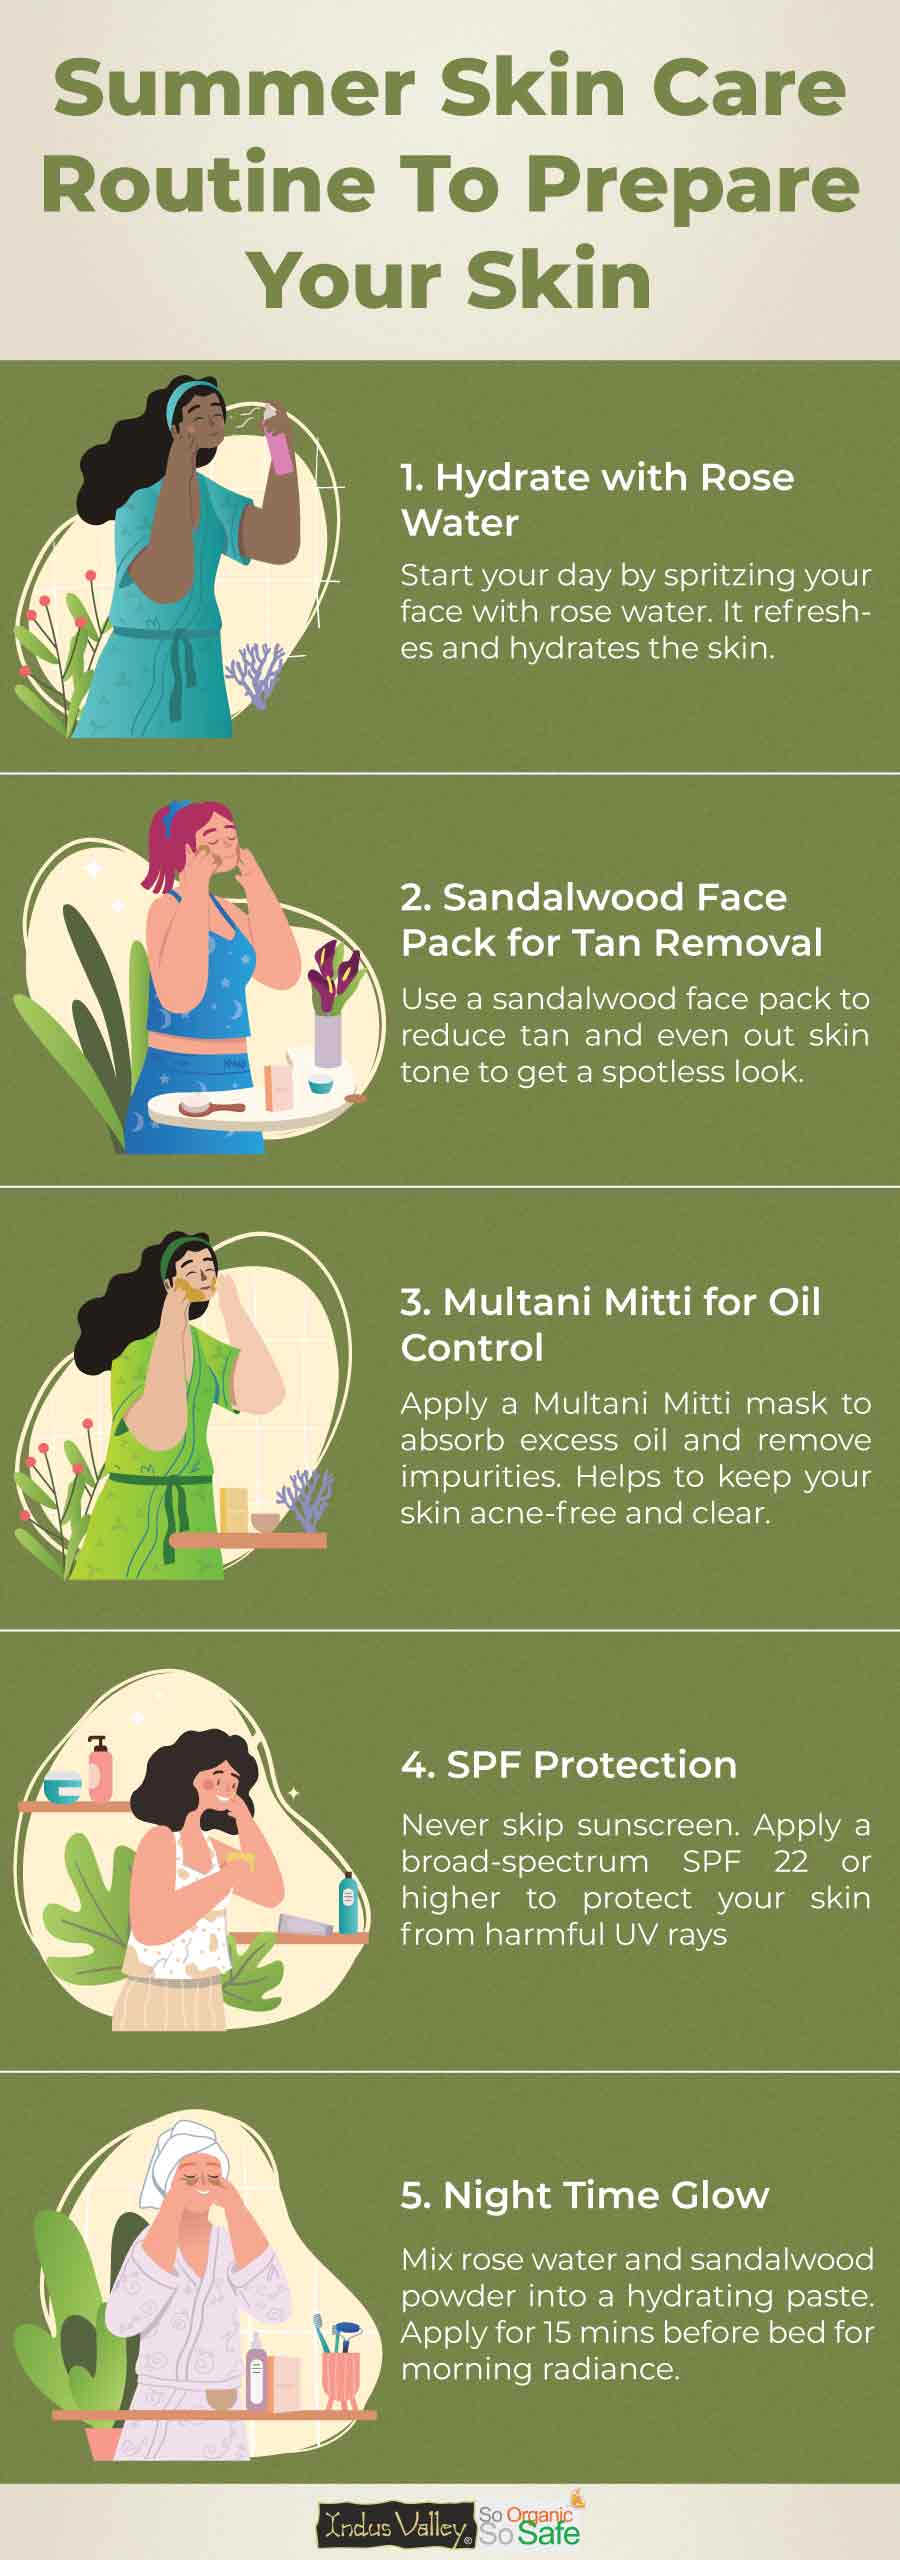 Summer Skin Care Routine To Prepare Your Skin